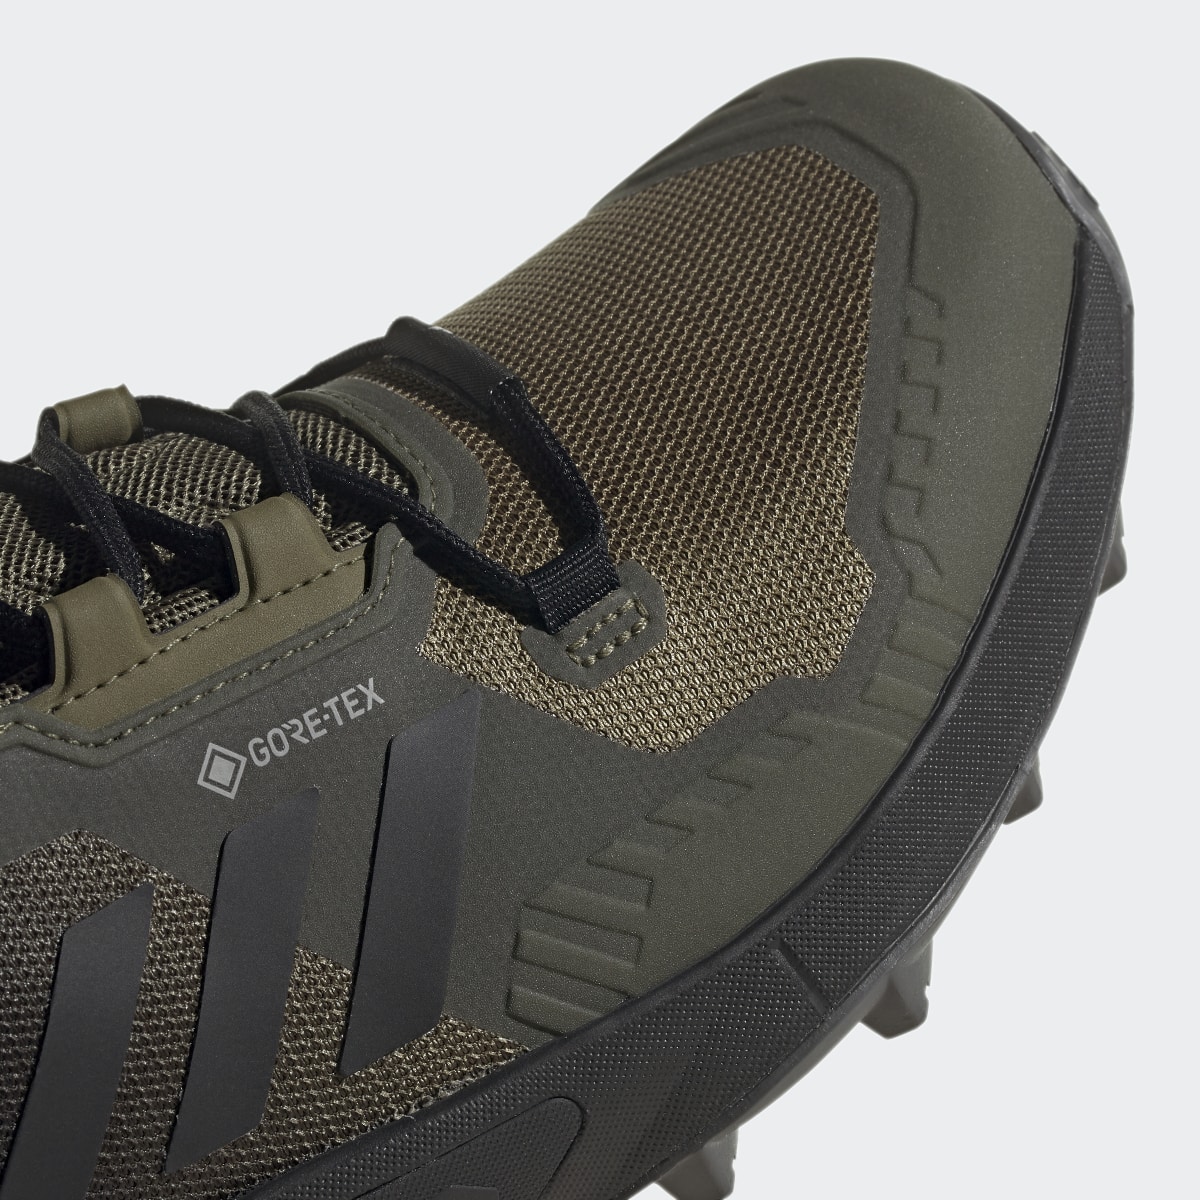 Adidas Terrex Swift R3 GORE-TEX Hiking Shoes. 10